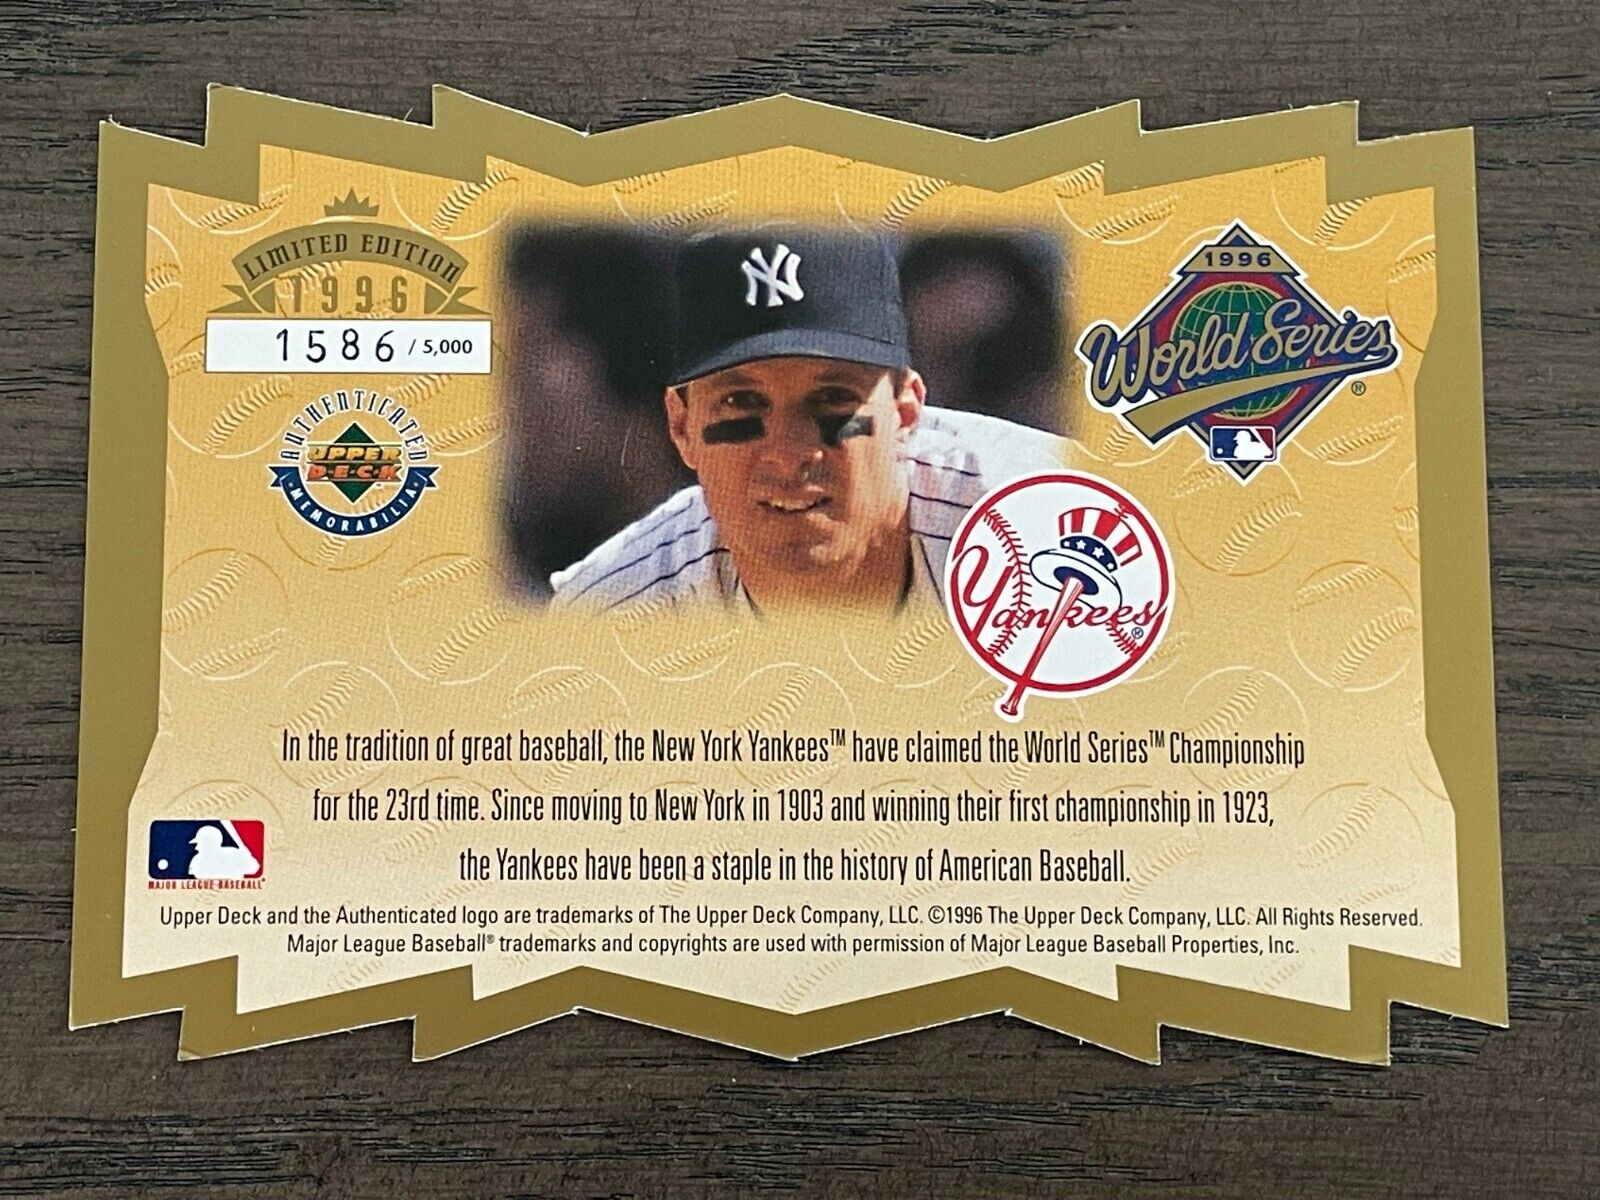 1996 Upper Deck New York Yankees World Series Champions Gold Jumbo Card  /5000 | eBay